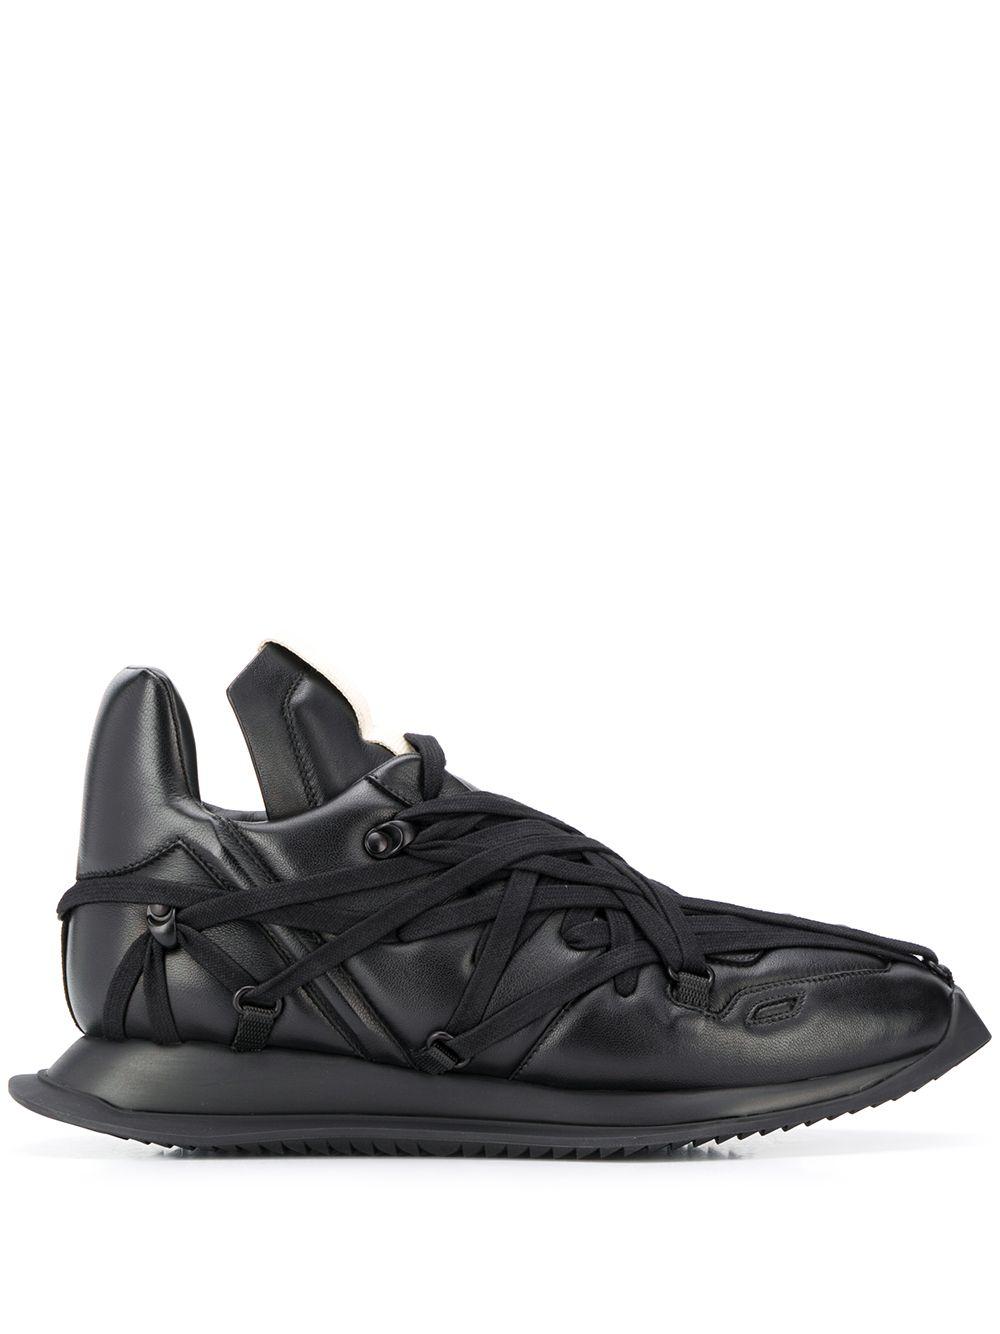 Rick Owens Maximal Runner Sneakers in Black for Men | Lyst